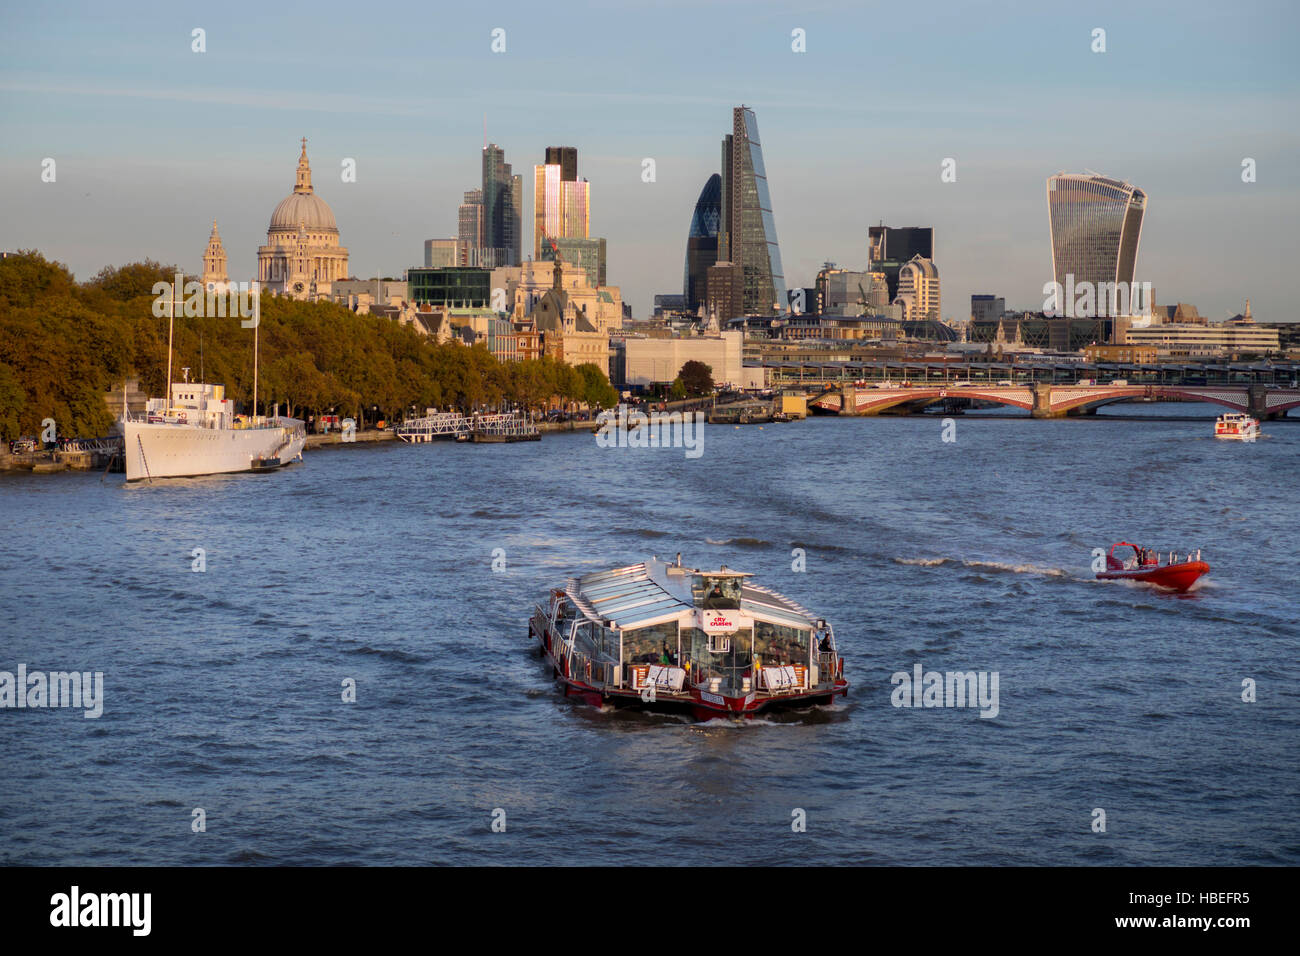 UK, England, London, City bateau mouche Stock Photo